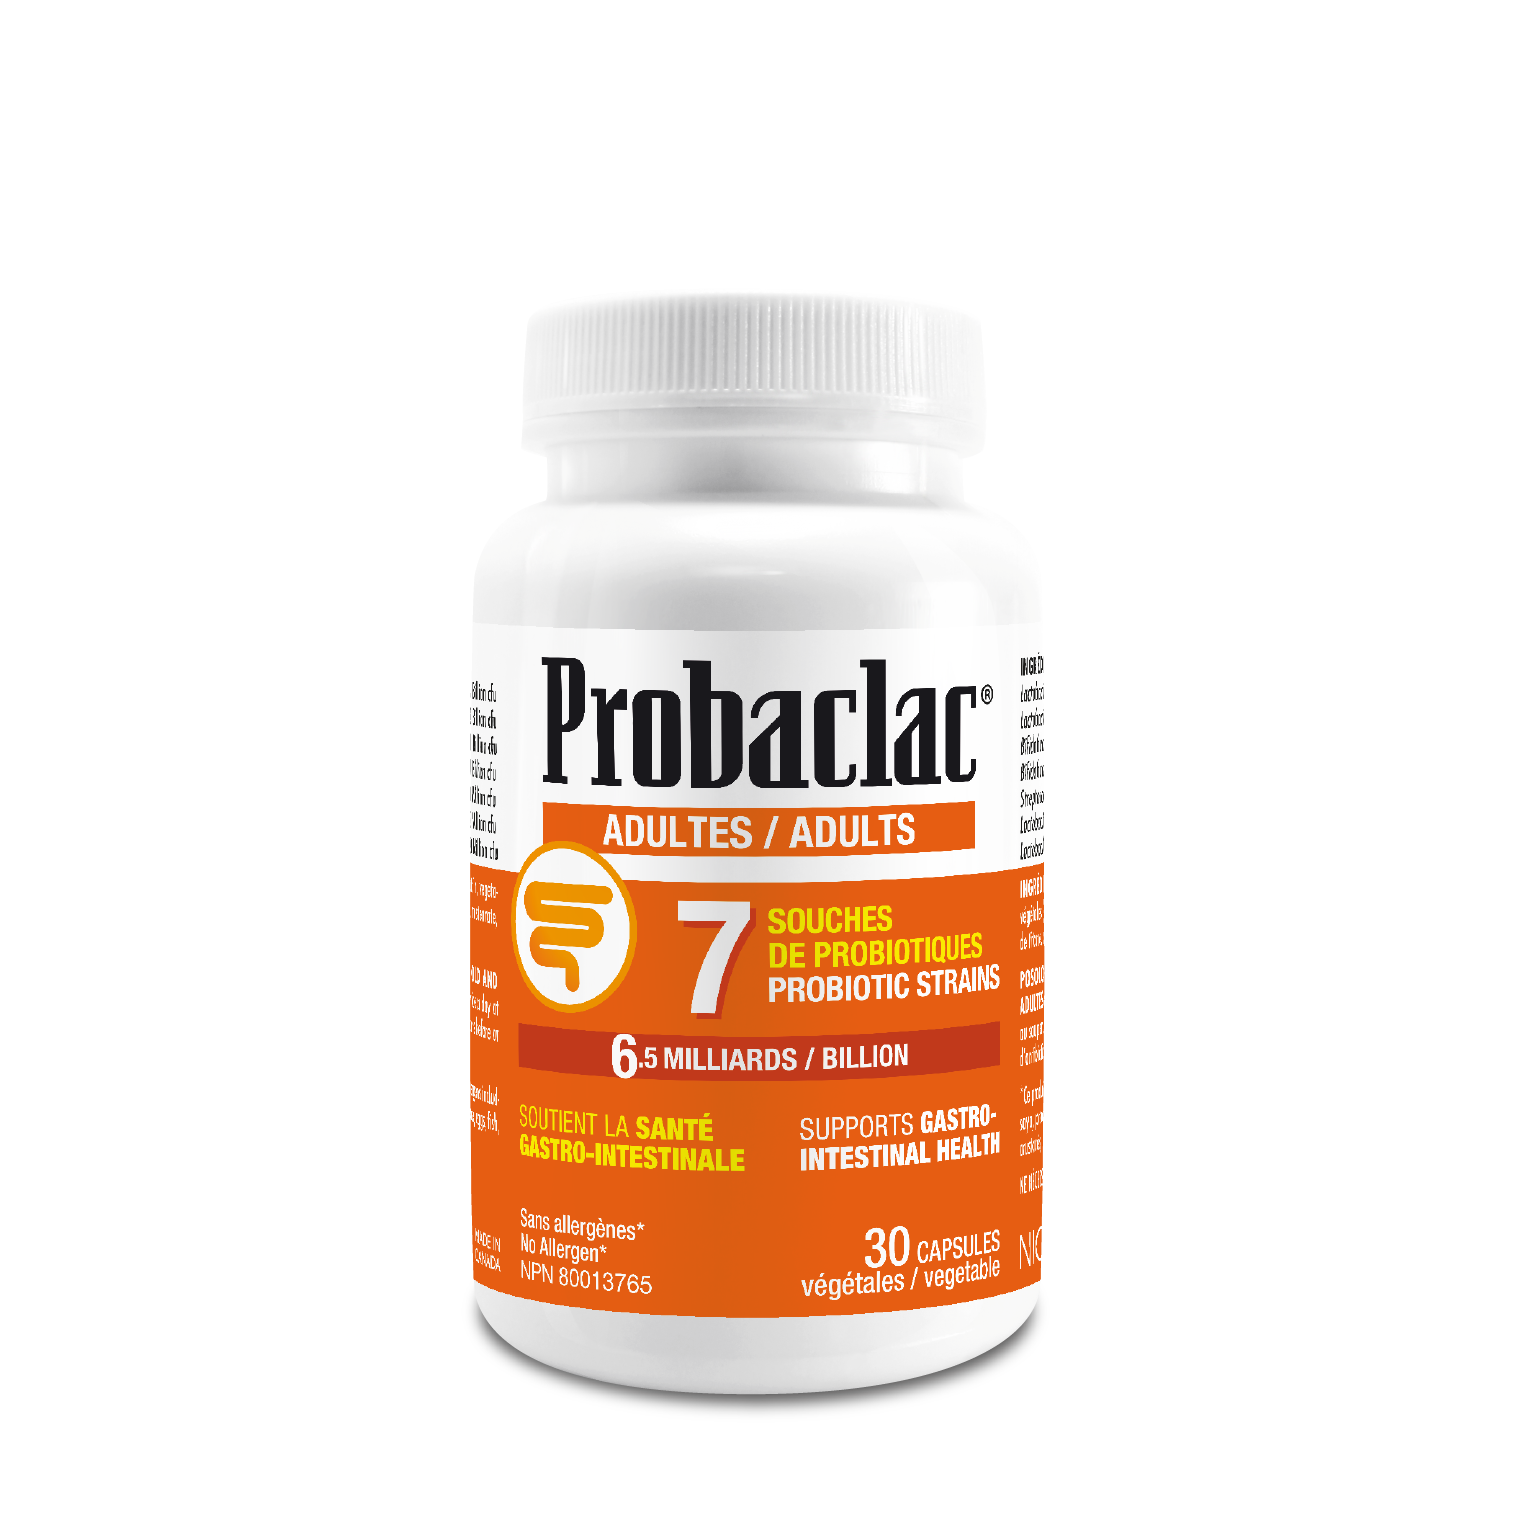 Probiotics for adults Probaclac